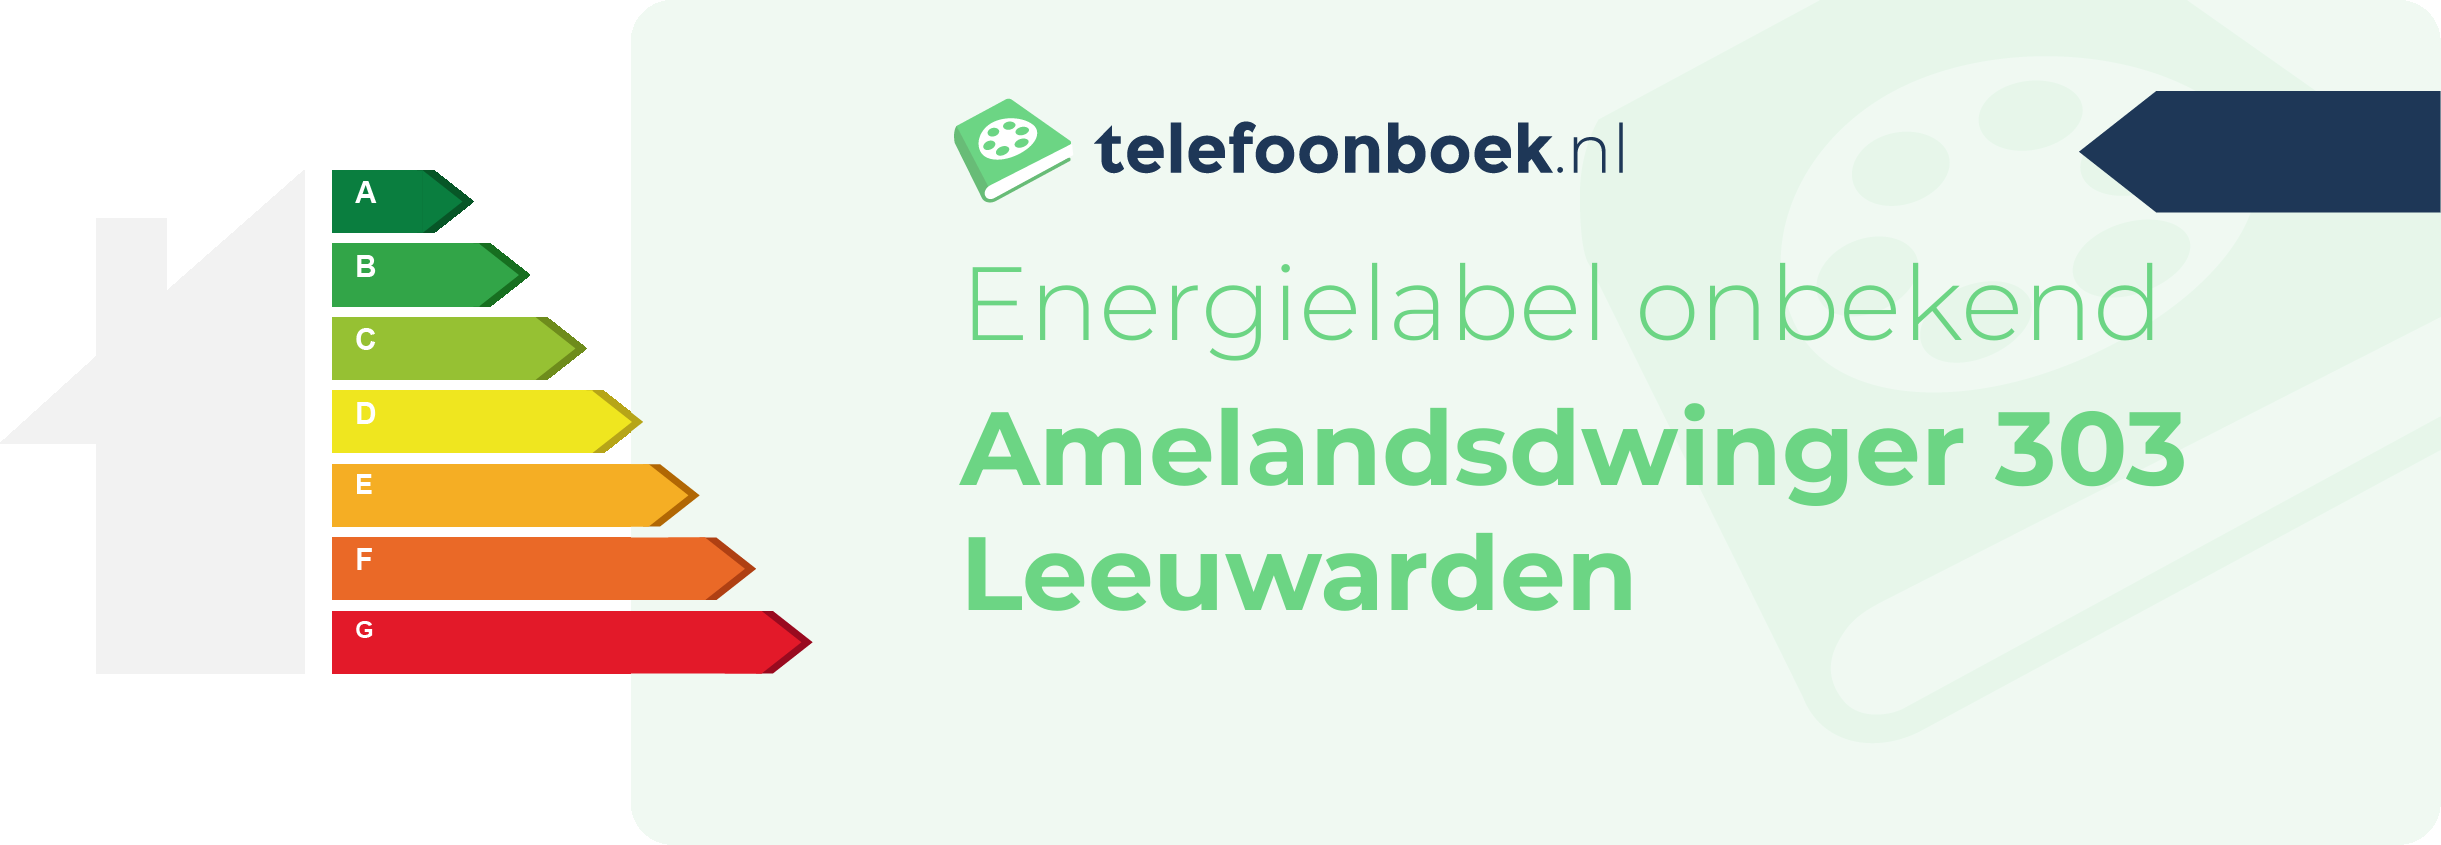 Energielabel Amelandsdwinger 303 Leeuwarden